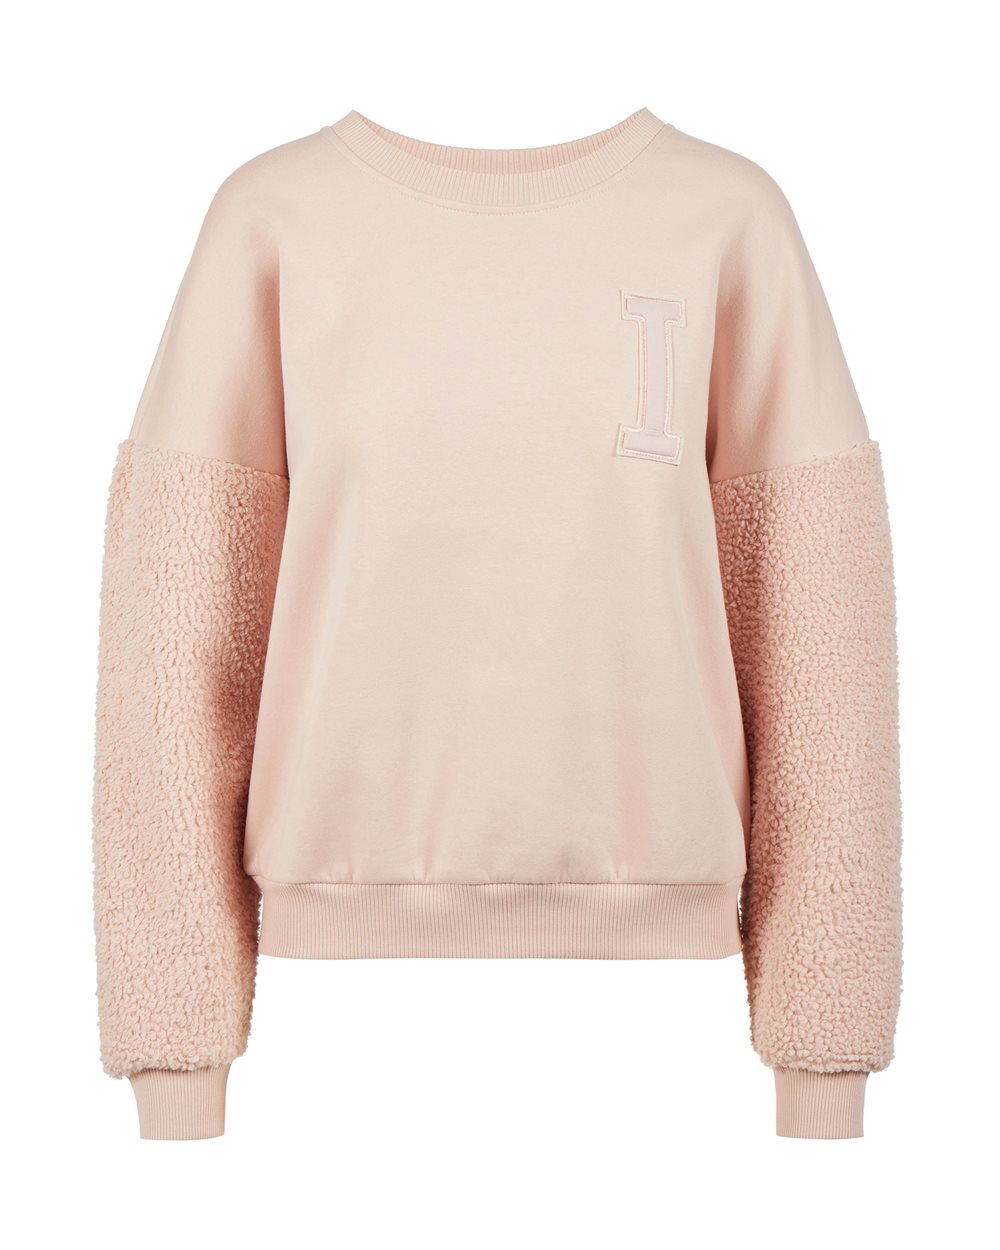 Sweatshirt with teddy details | Iceberg - Official Website